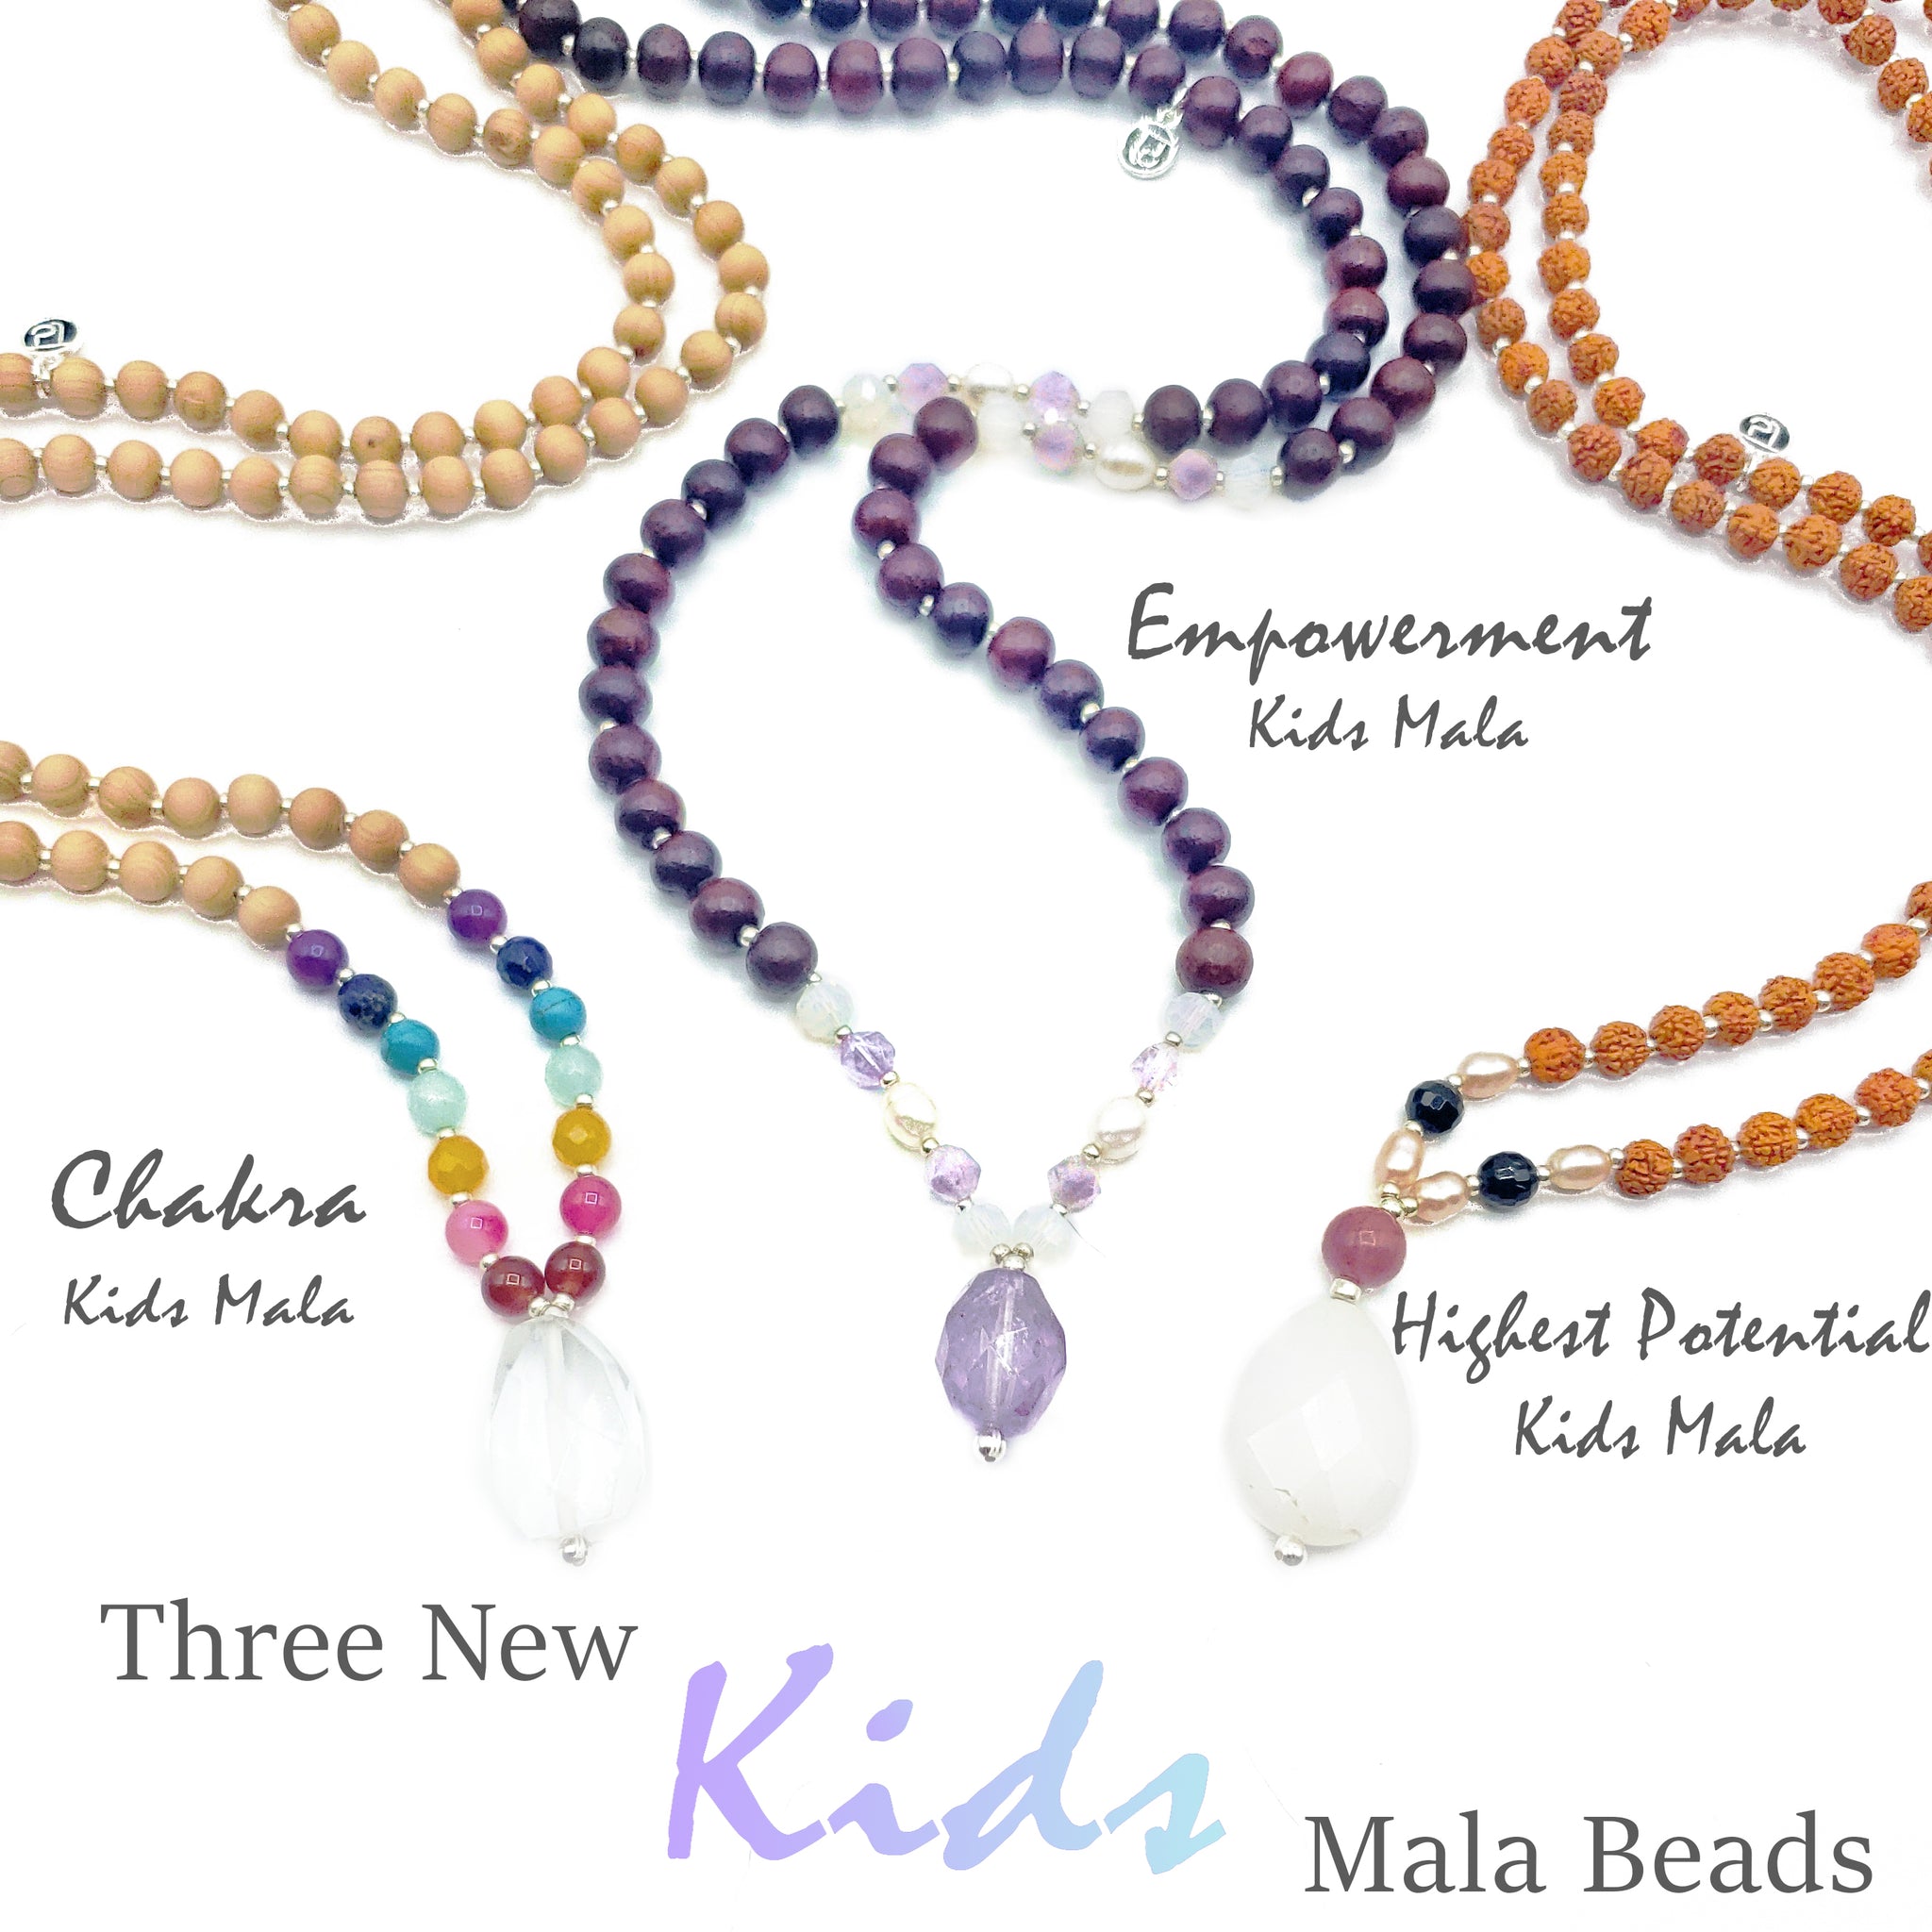 Highest Potential Kids Mala Beads.